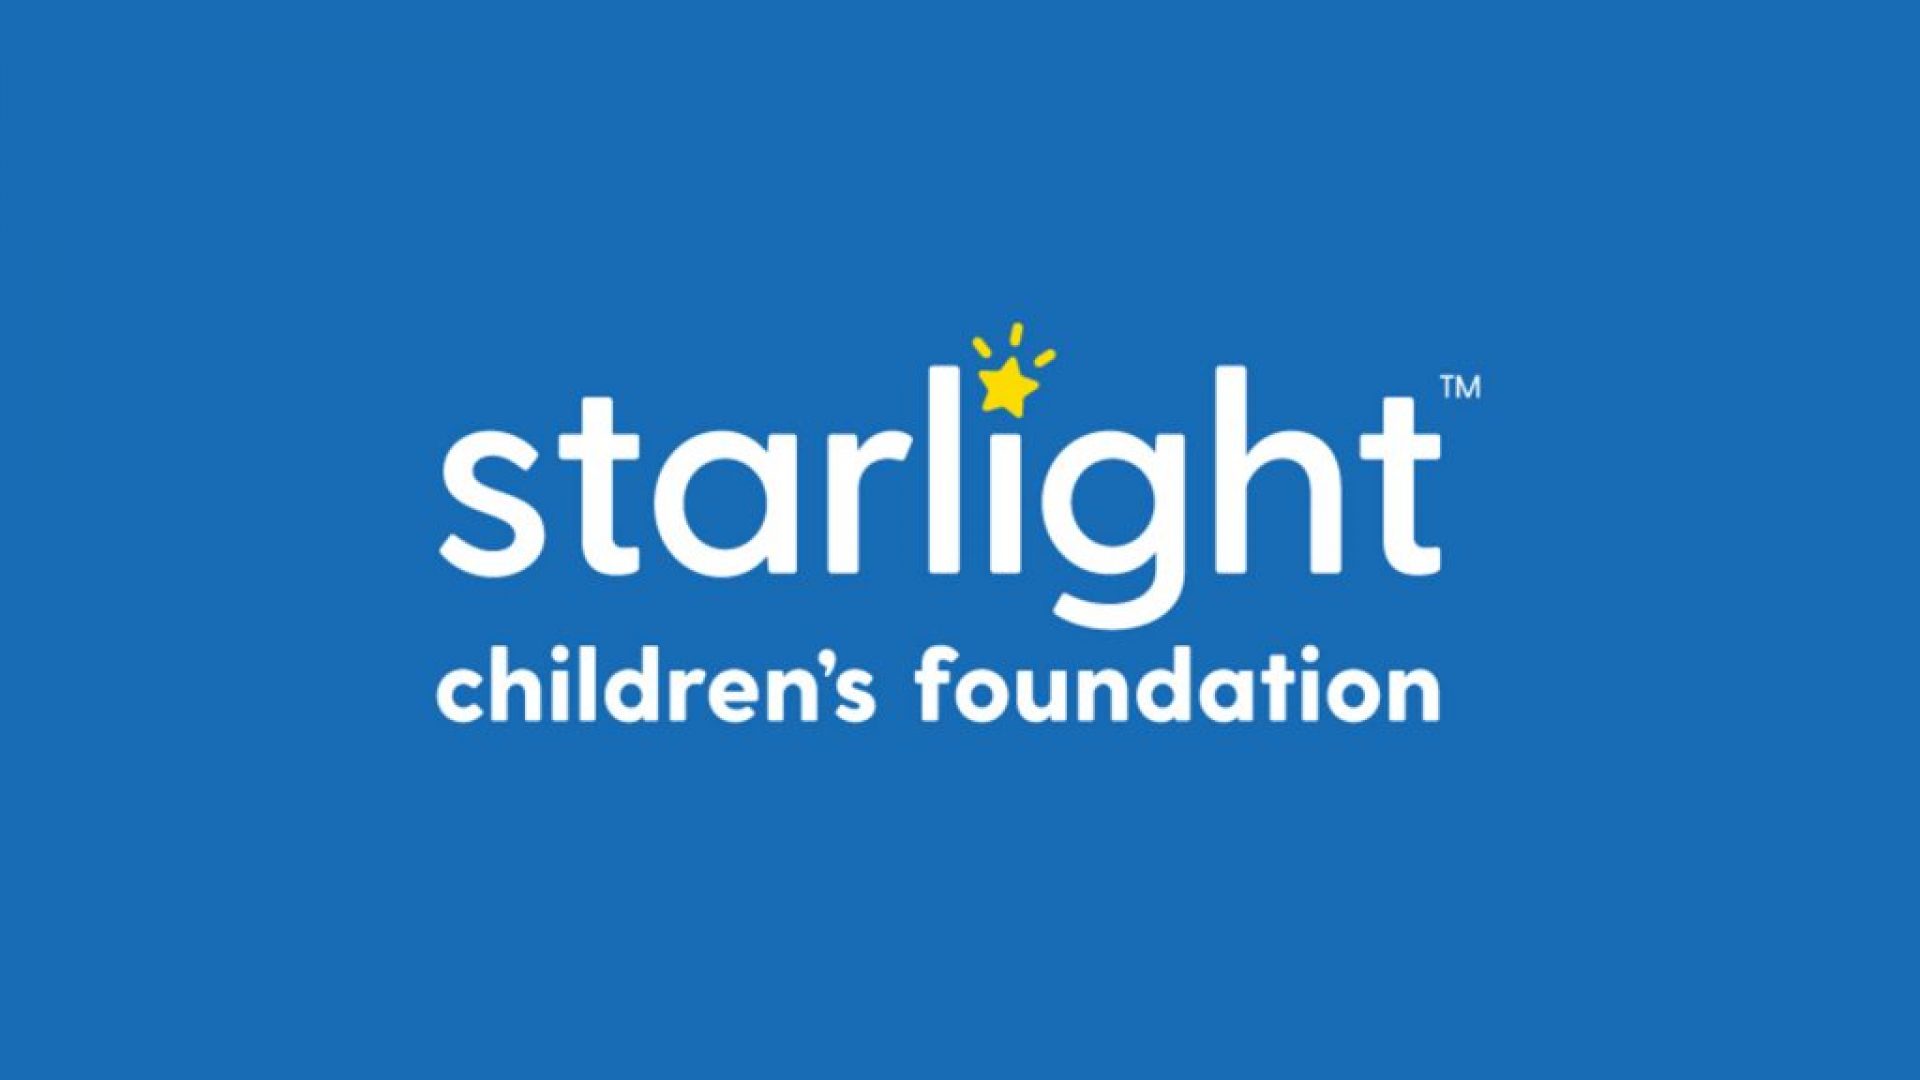 starlight cf logo 16 by 9